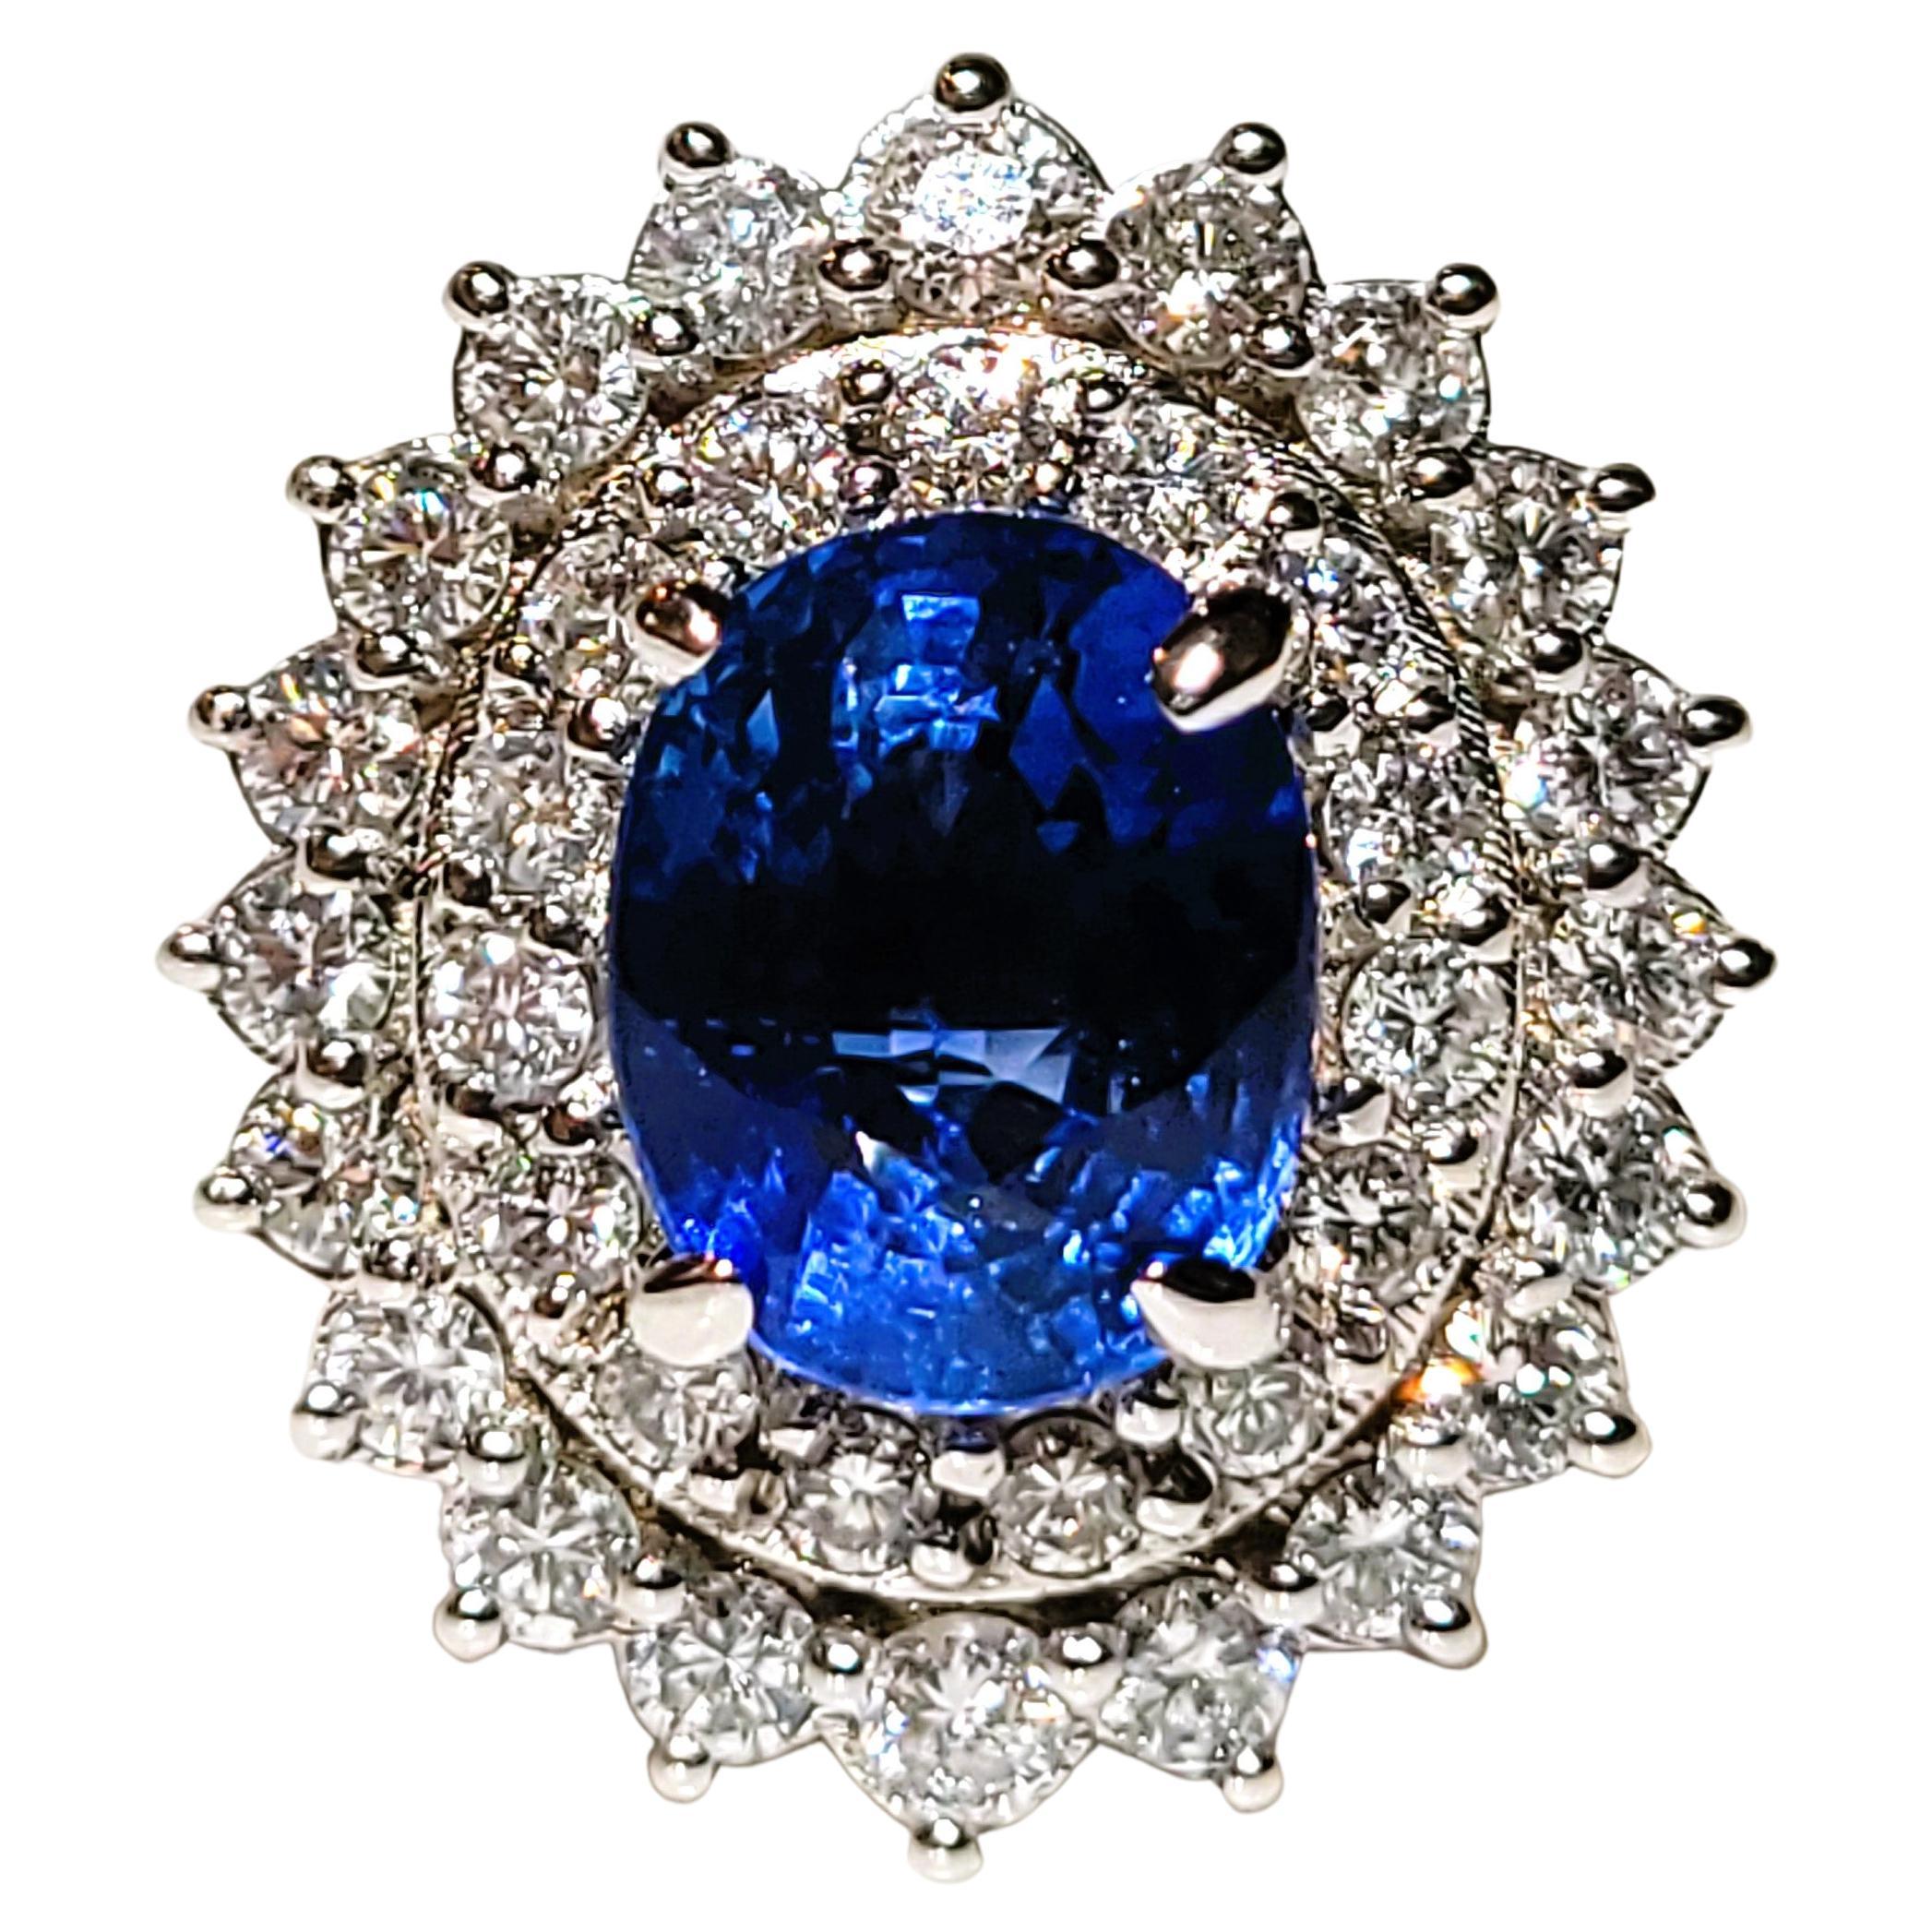 3.31cttw Diamond & Sapphire "Princess Diana" Style 18kt White Gold Ring